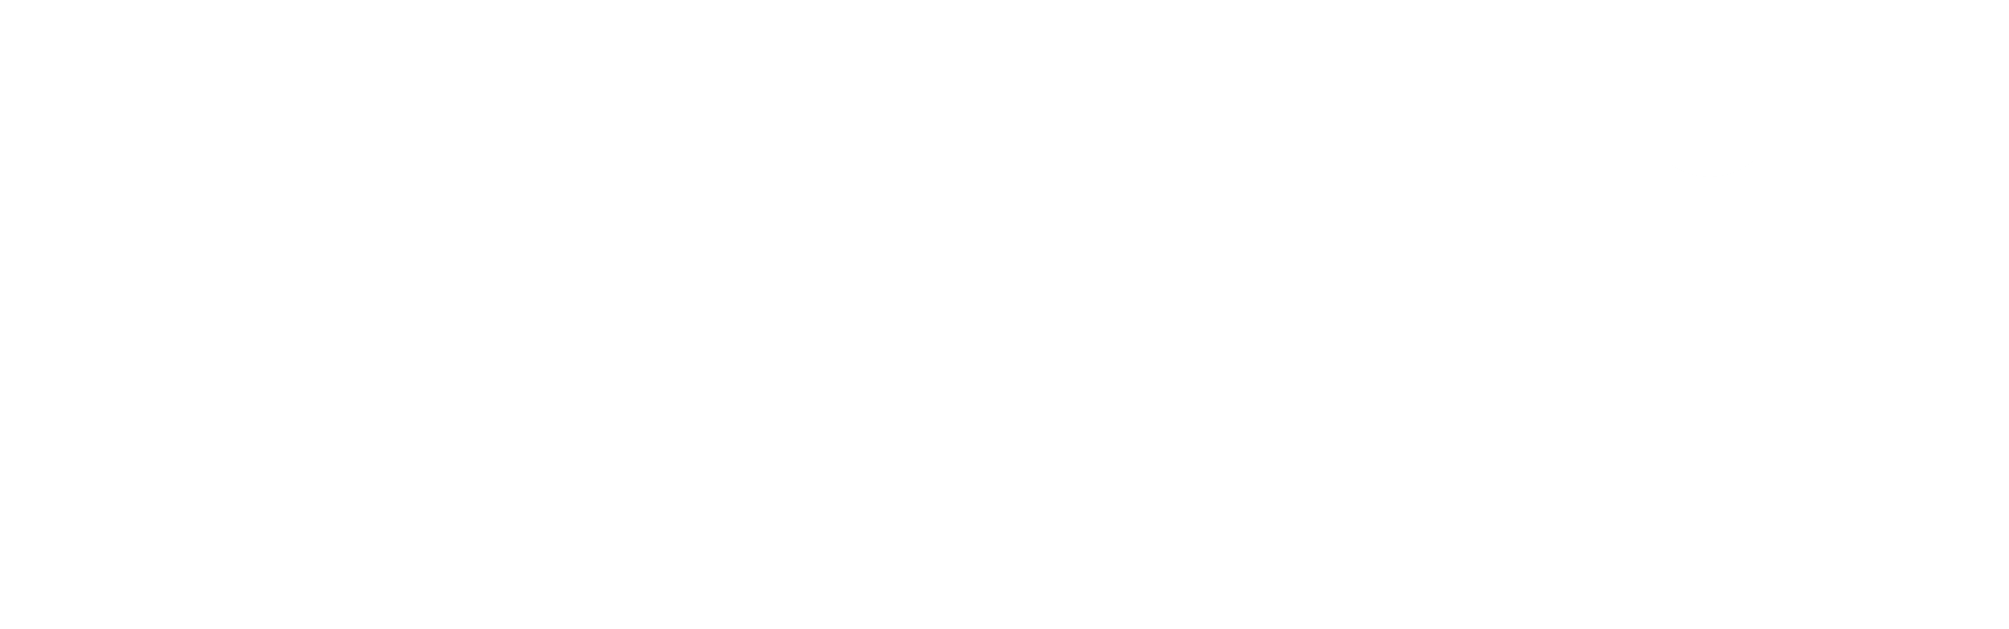 argenx logo